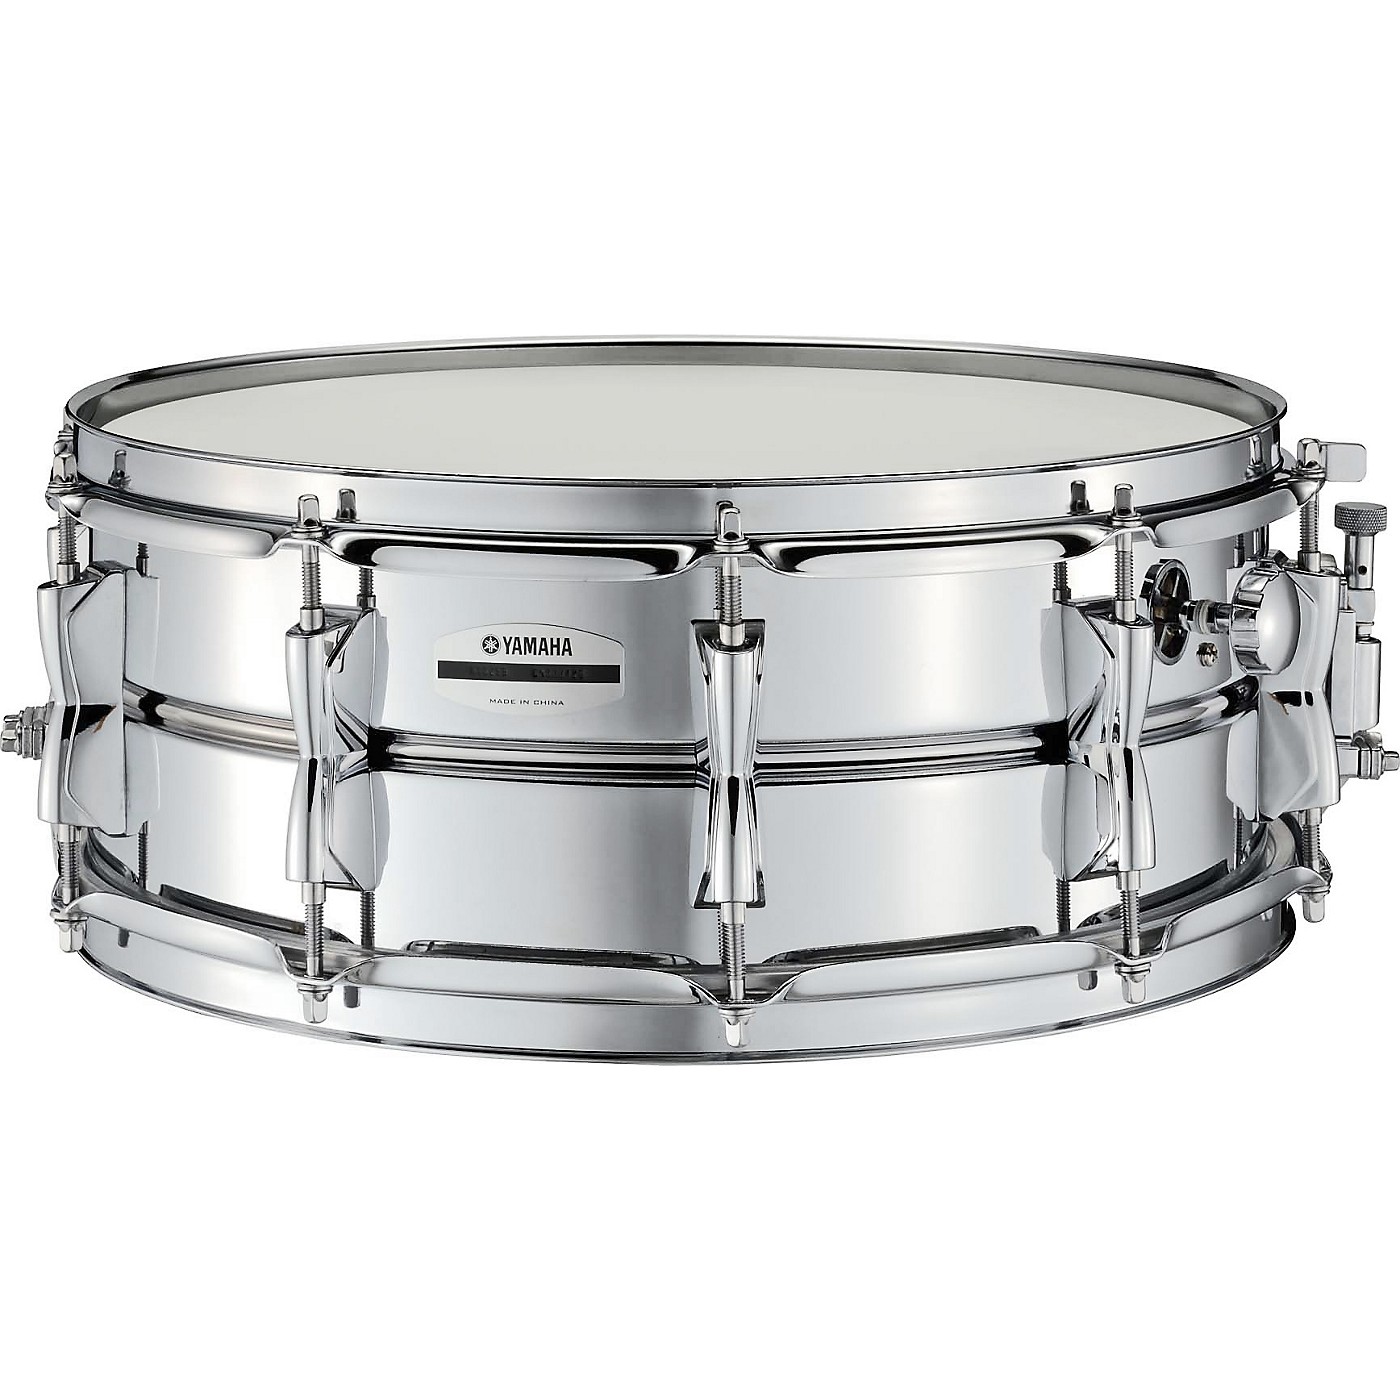 Yamaha Student Steel Snare Drum thumbnail